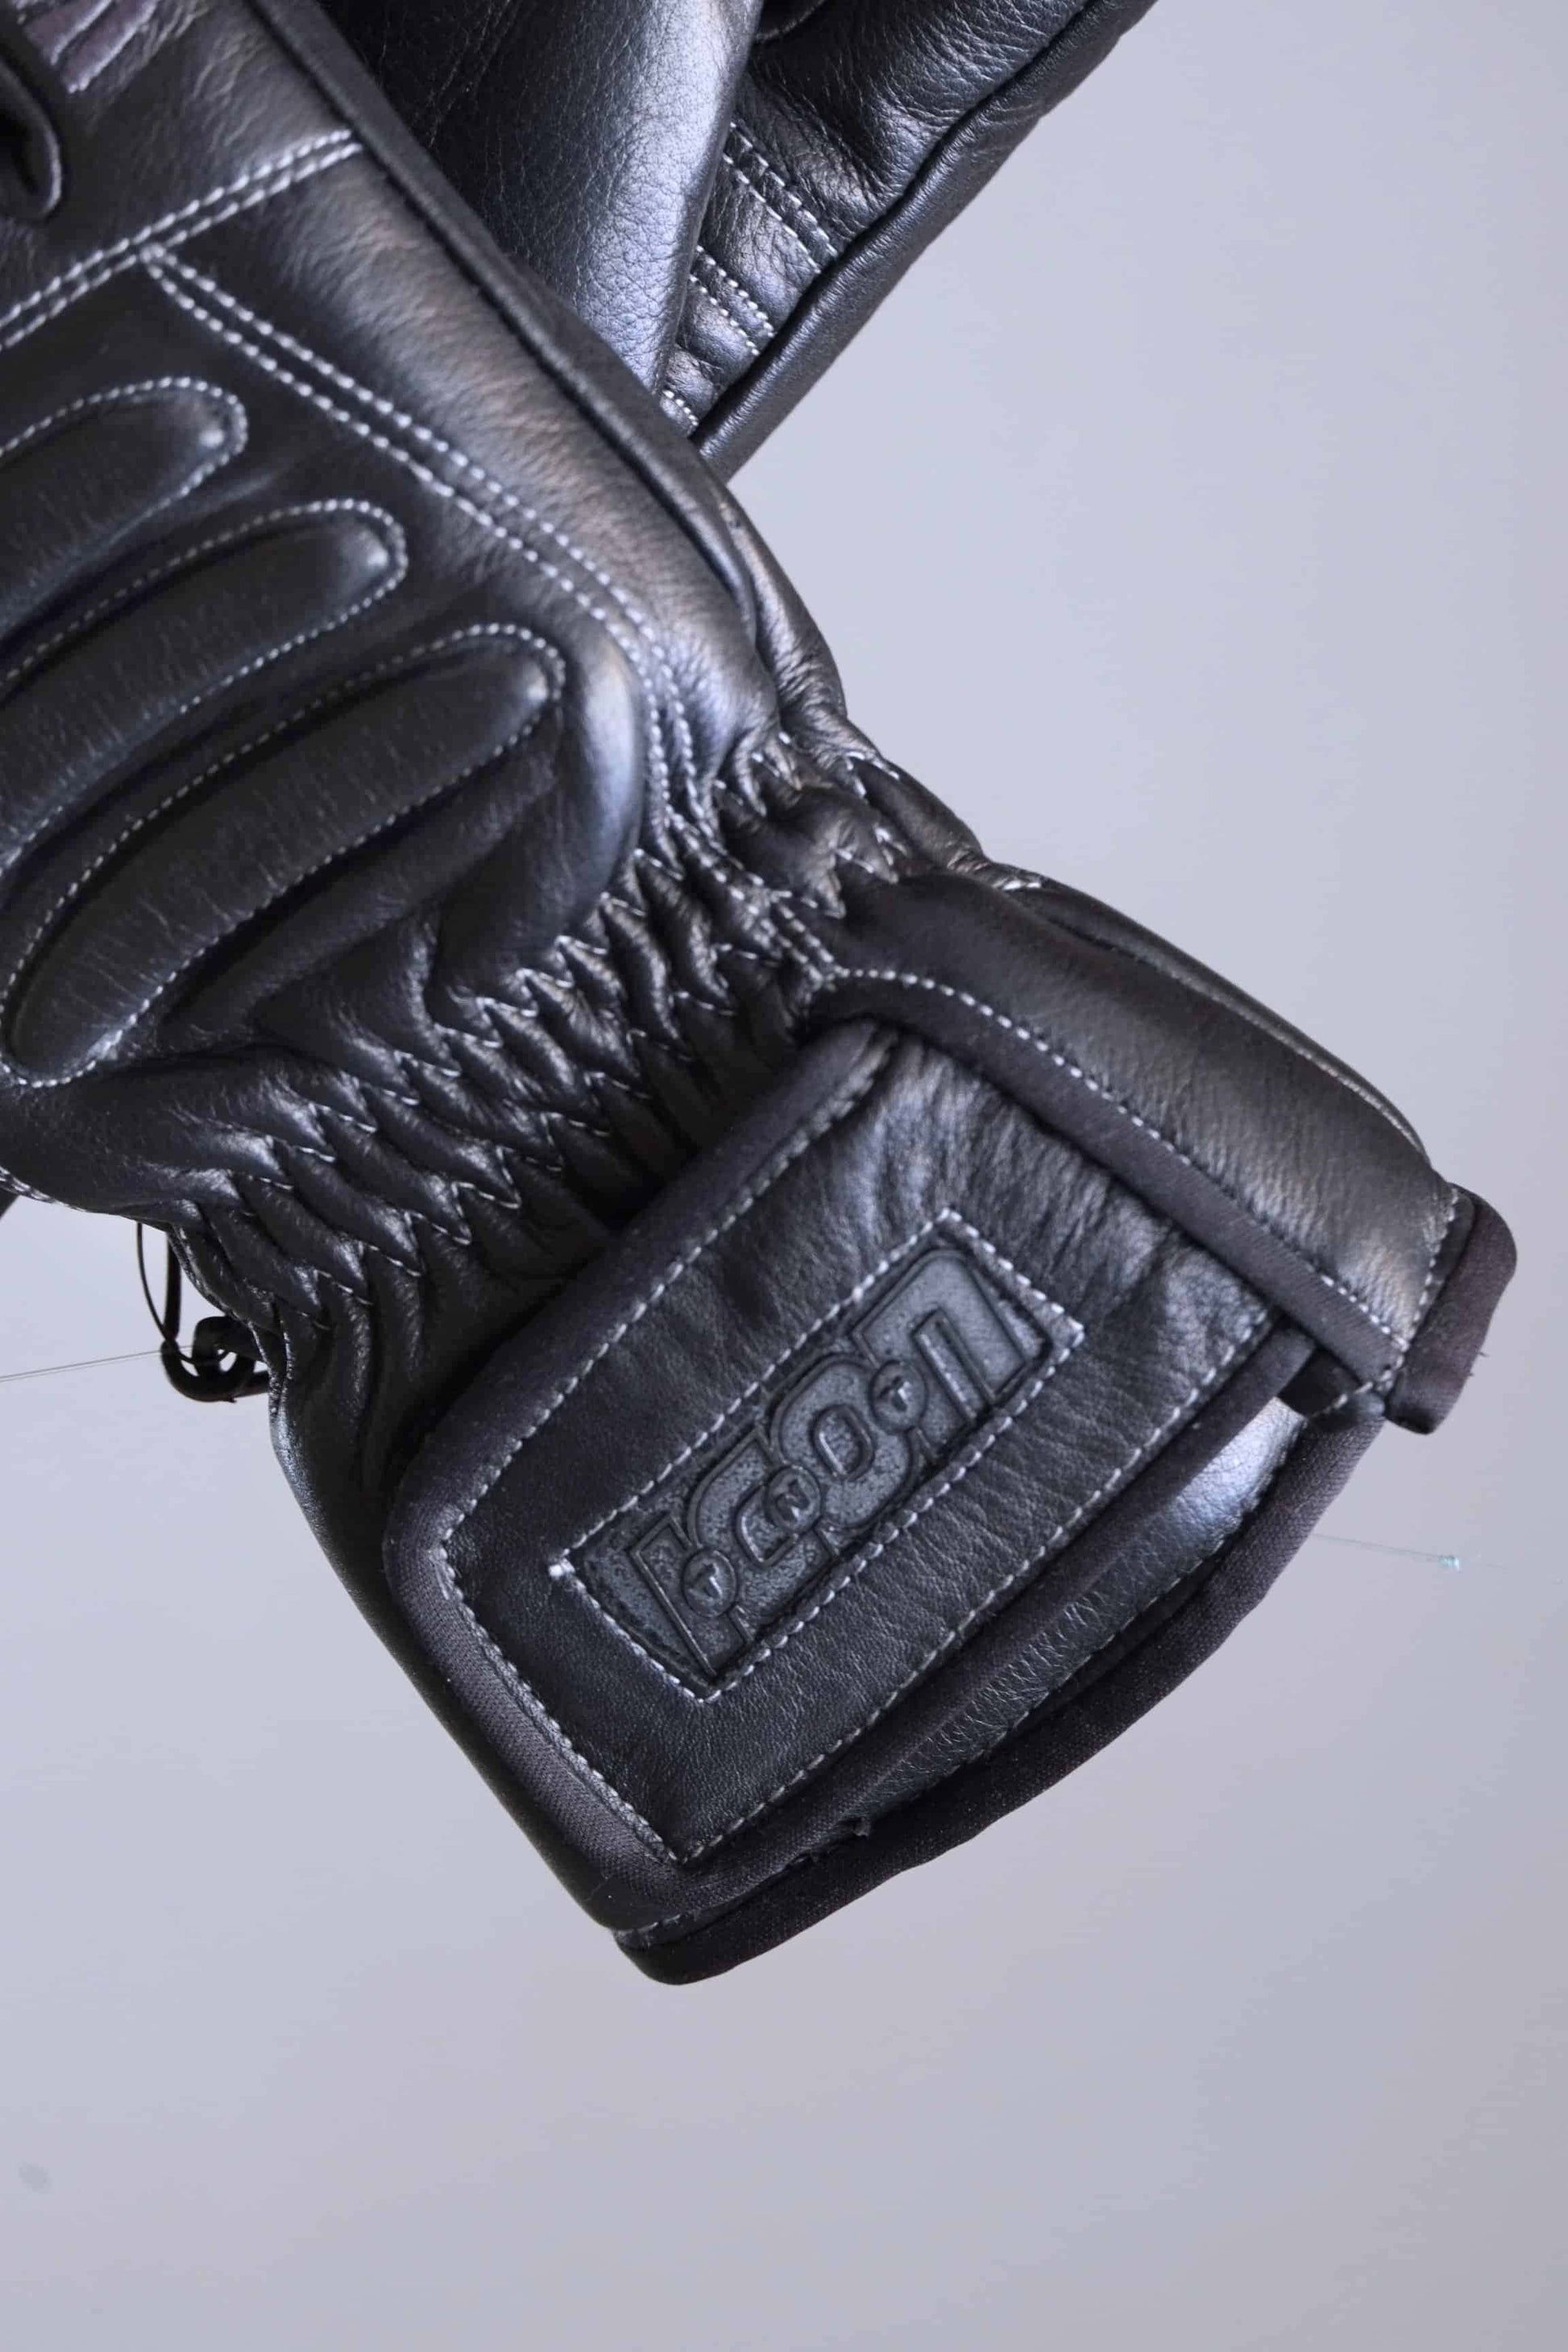 TECNICA Vintage Icon TNT Leather Ski Gloves detail